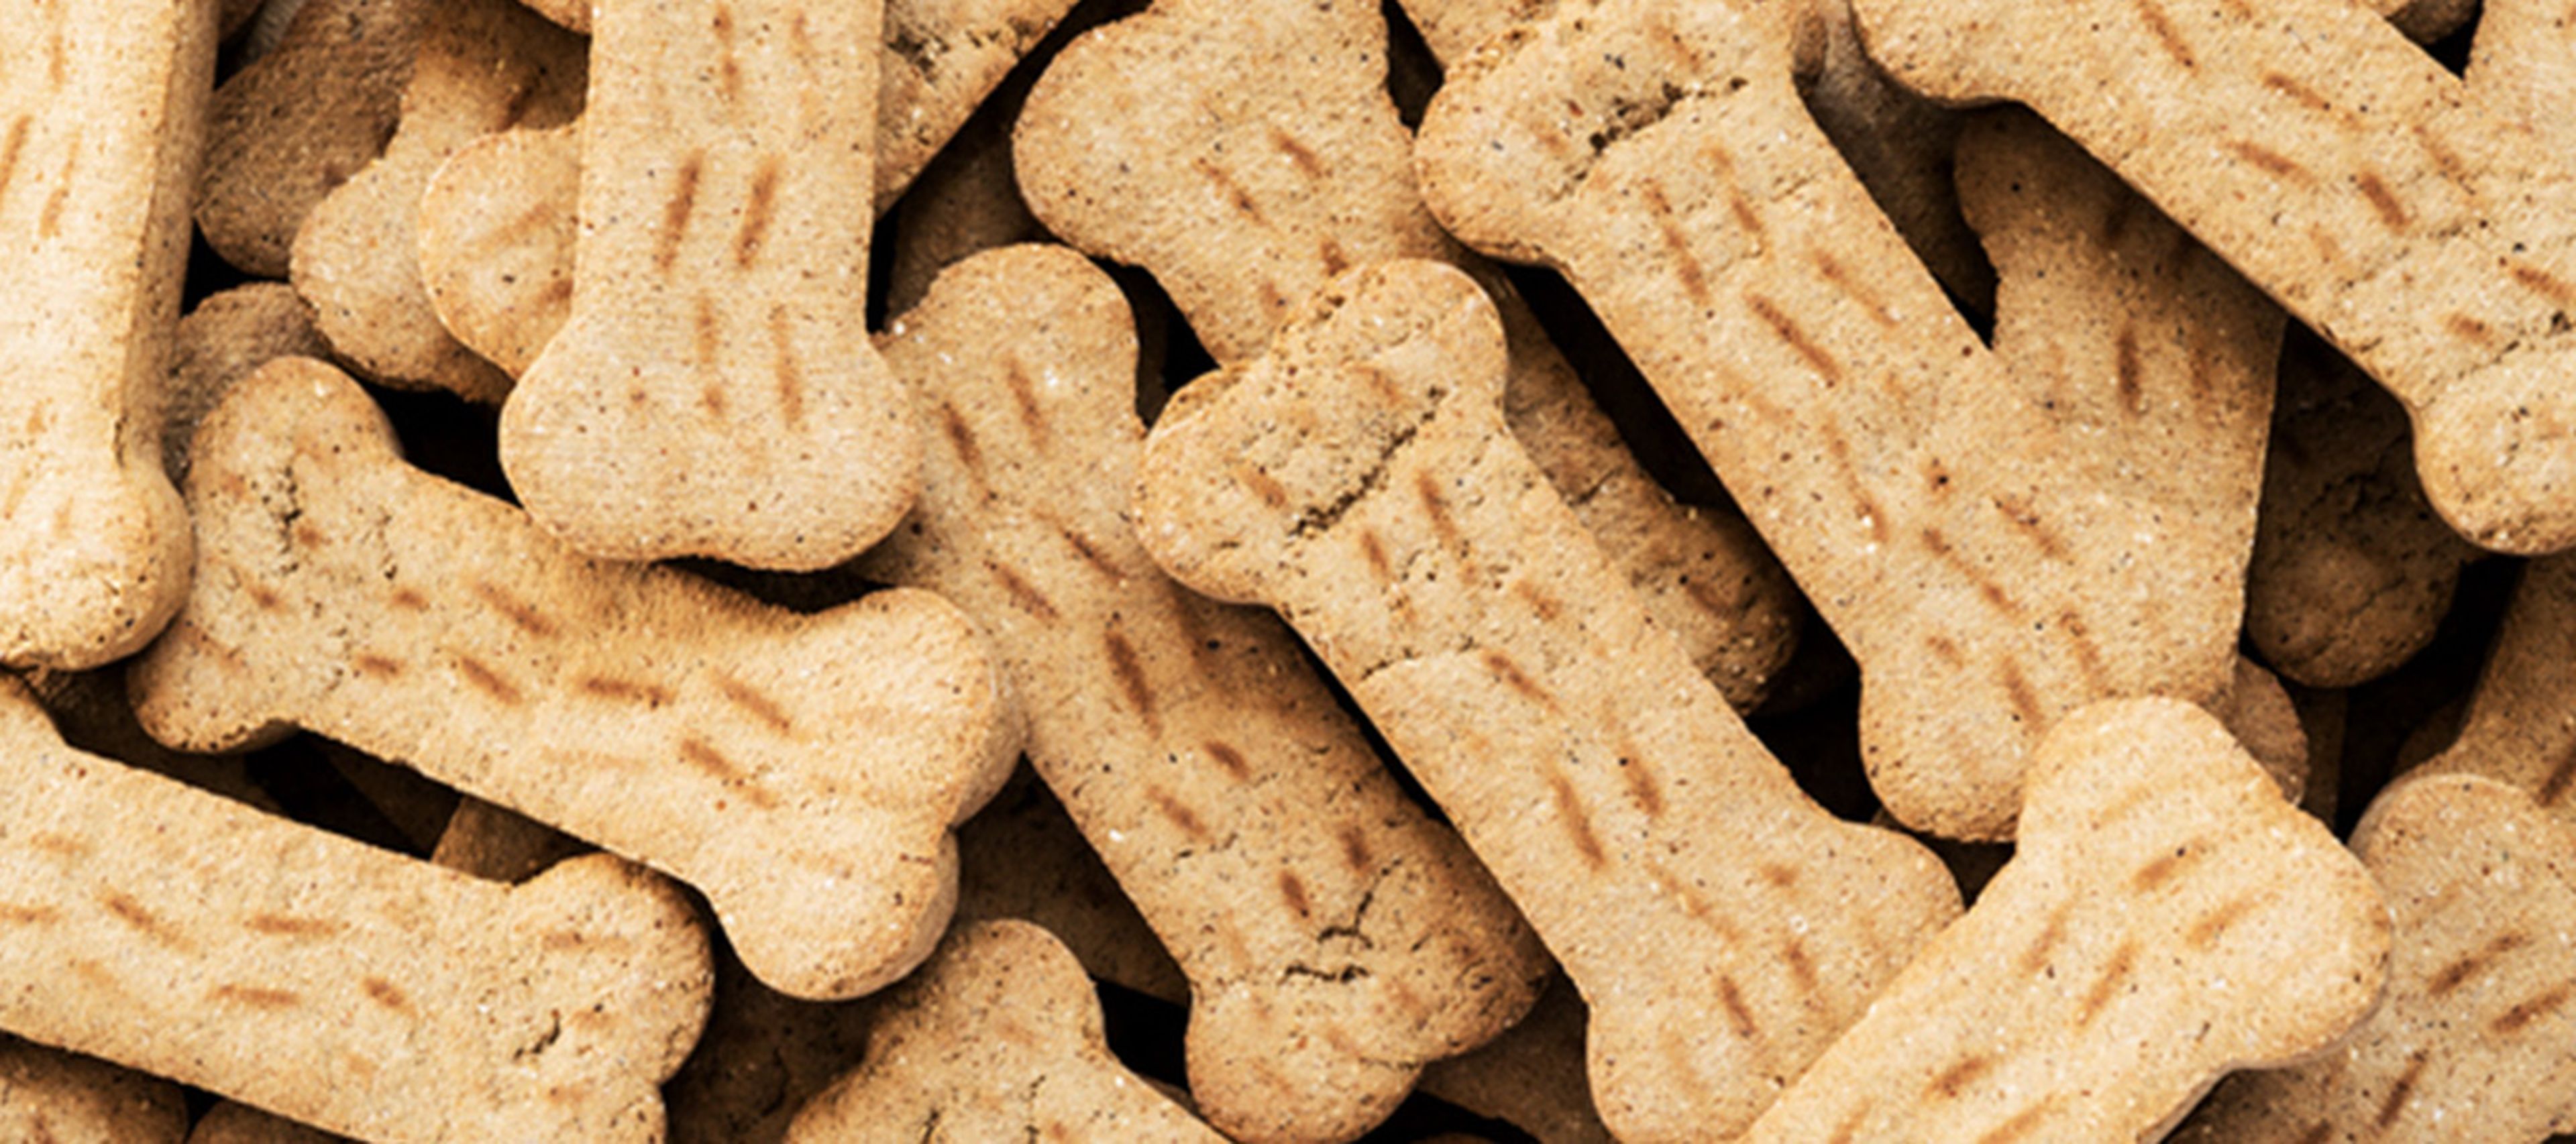 A close-up of a pile of bone-shaped dog treats.